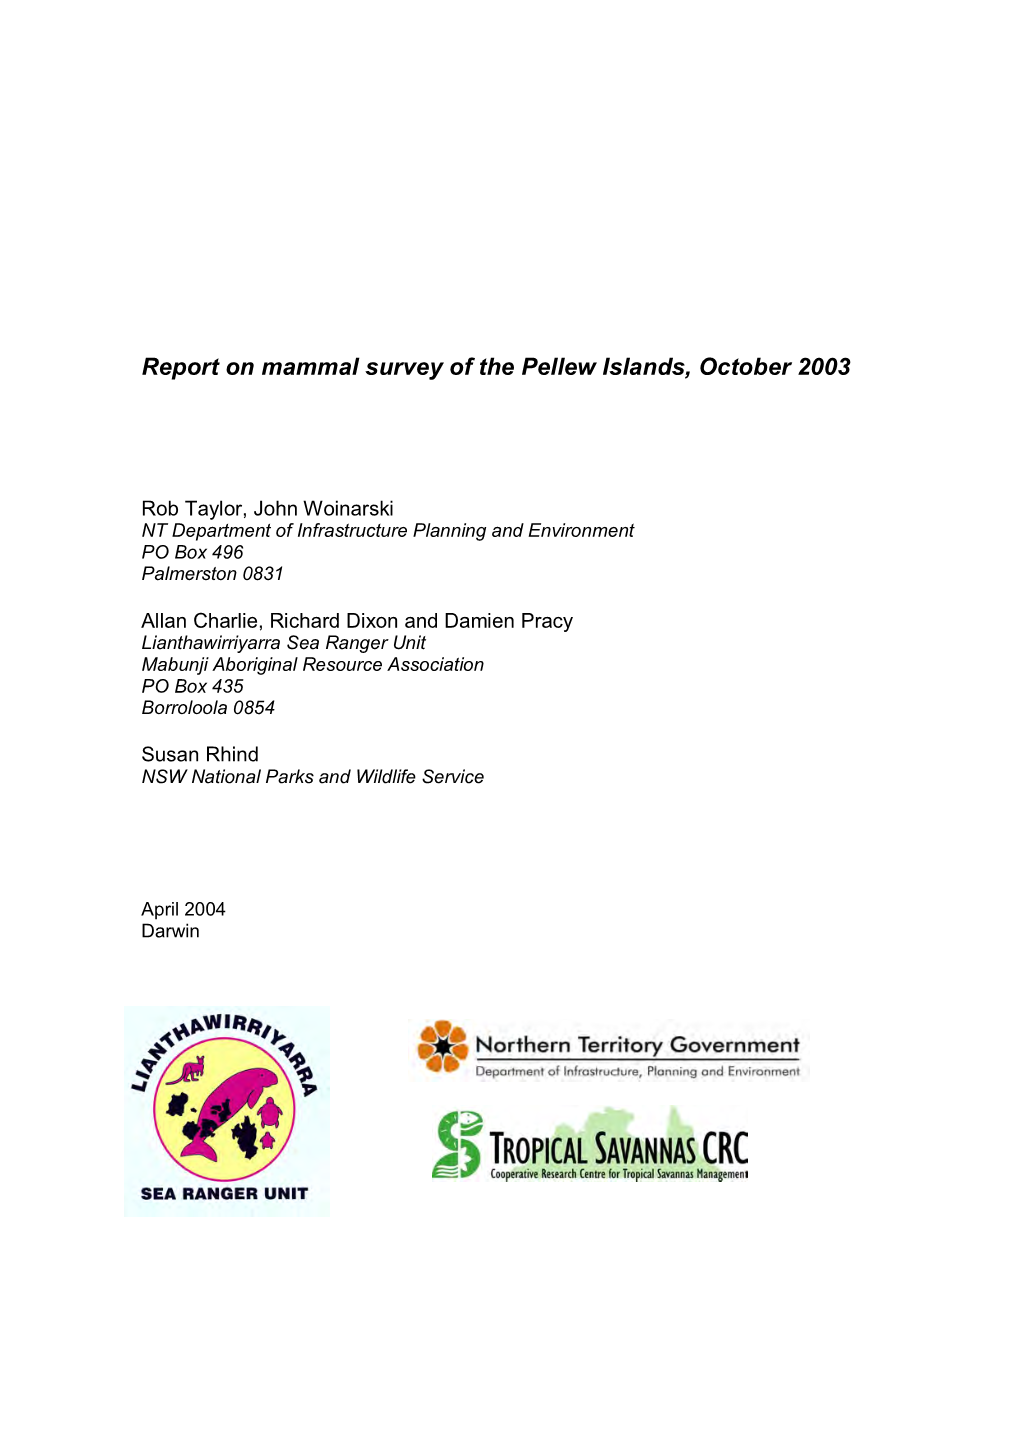 Report on Mammal Survey of the Pellew Islands, October 2003